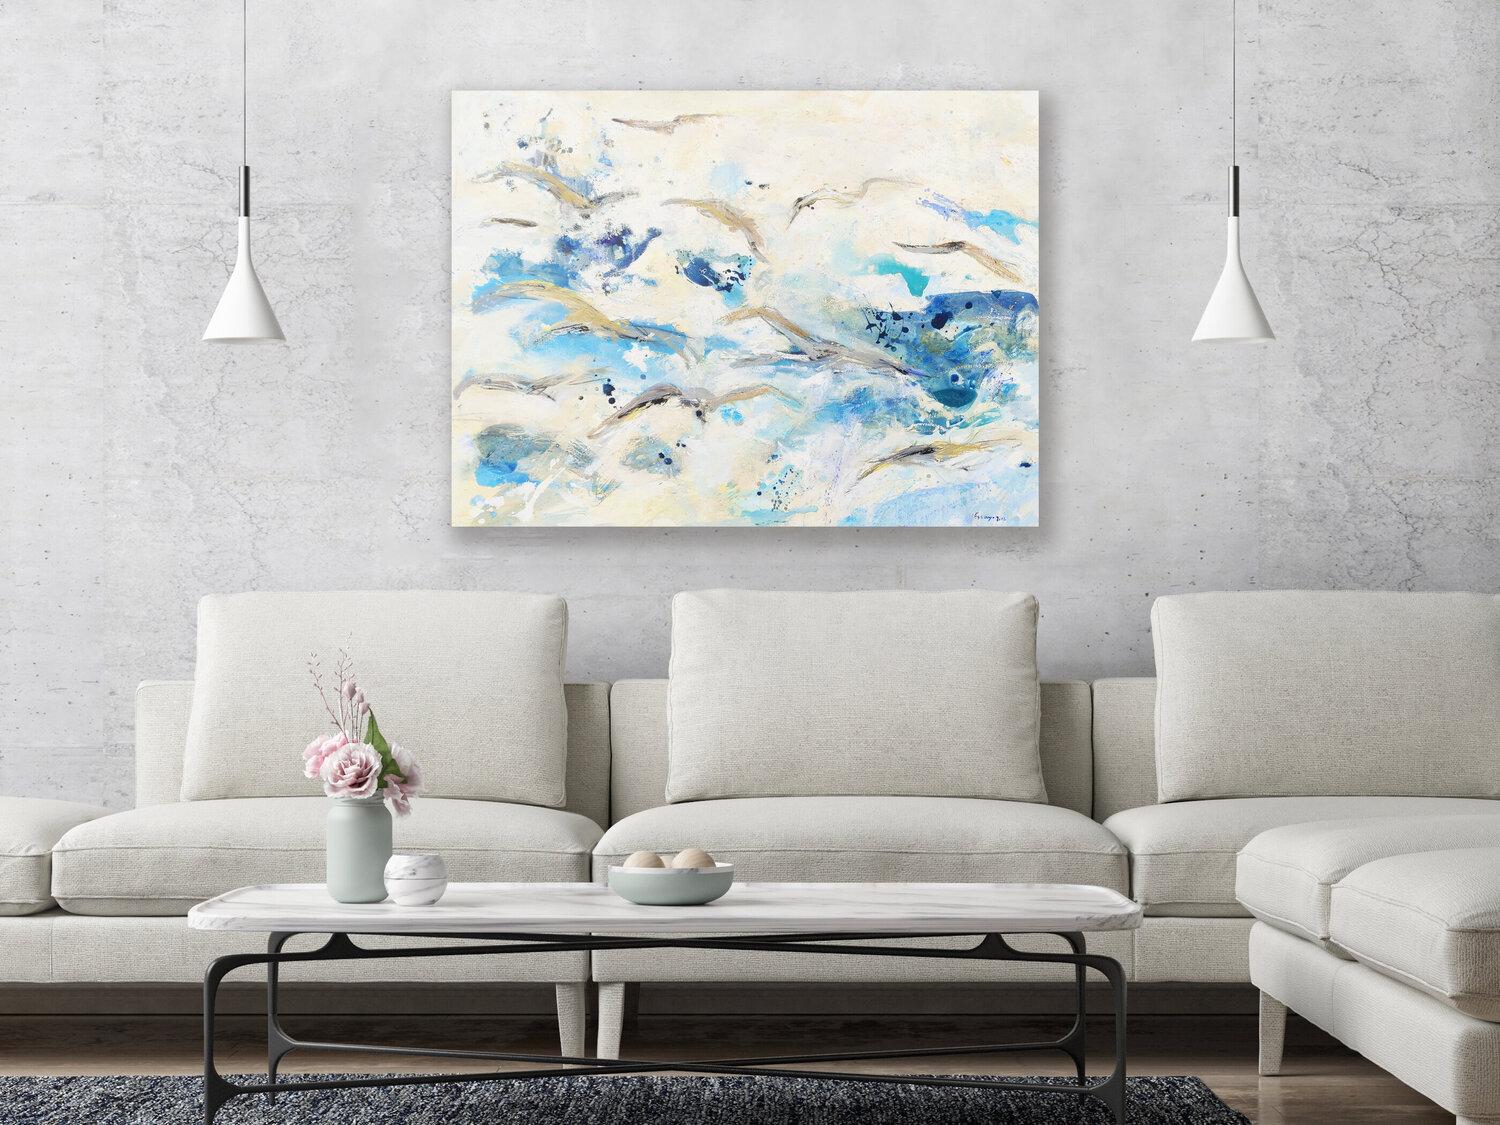 Wind, Sea, Seagulls - Painting by Alba Escayo